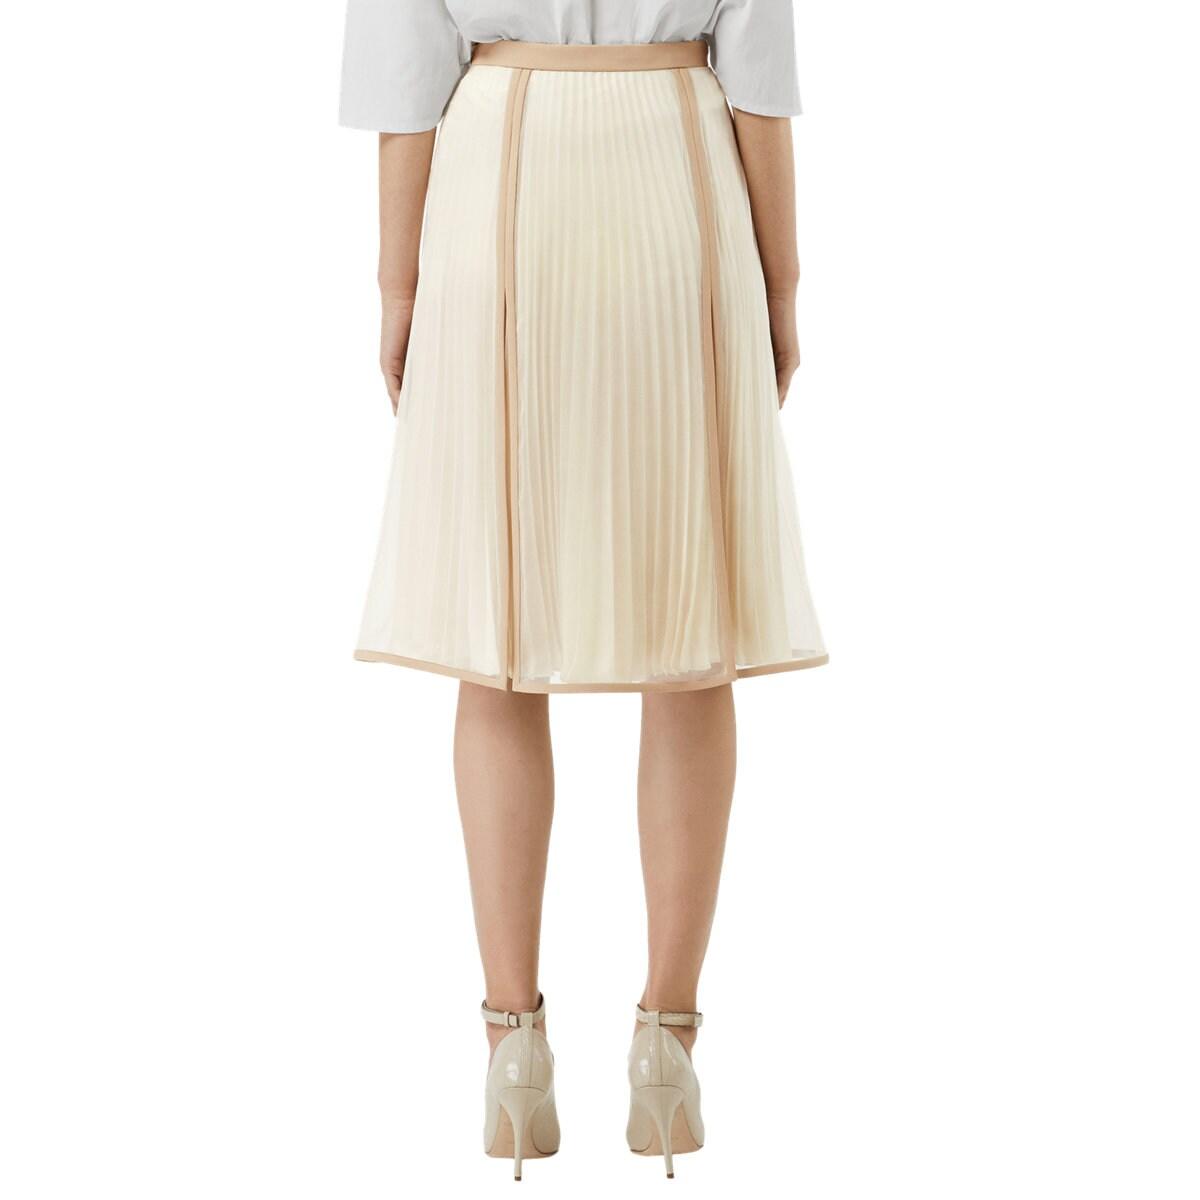 Burberry Silk Organza Layered Skirt in White - Lyst